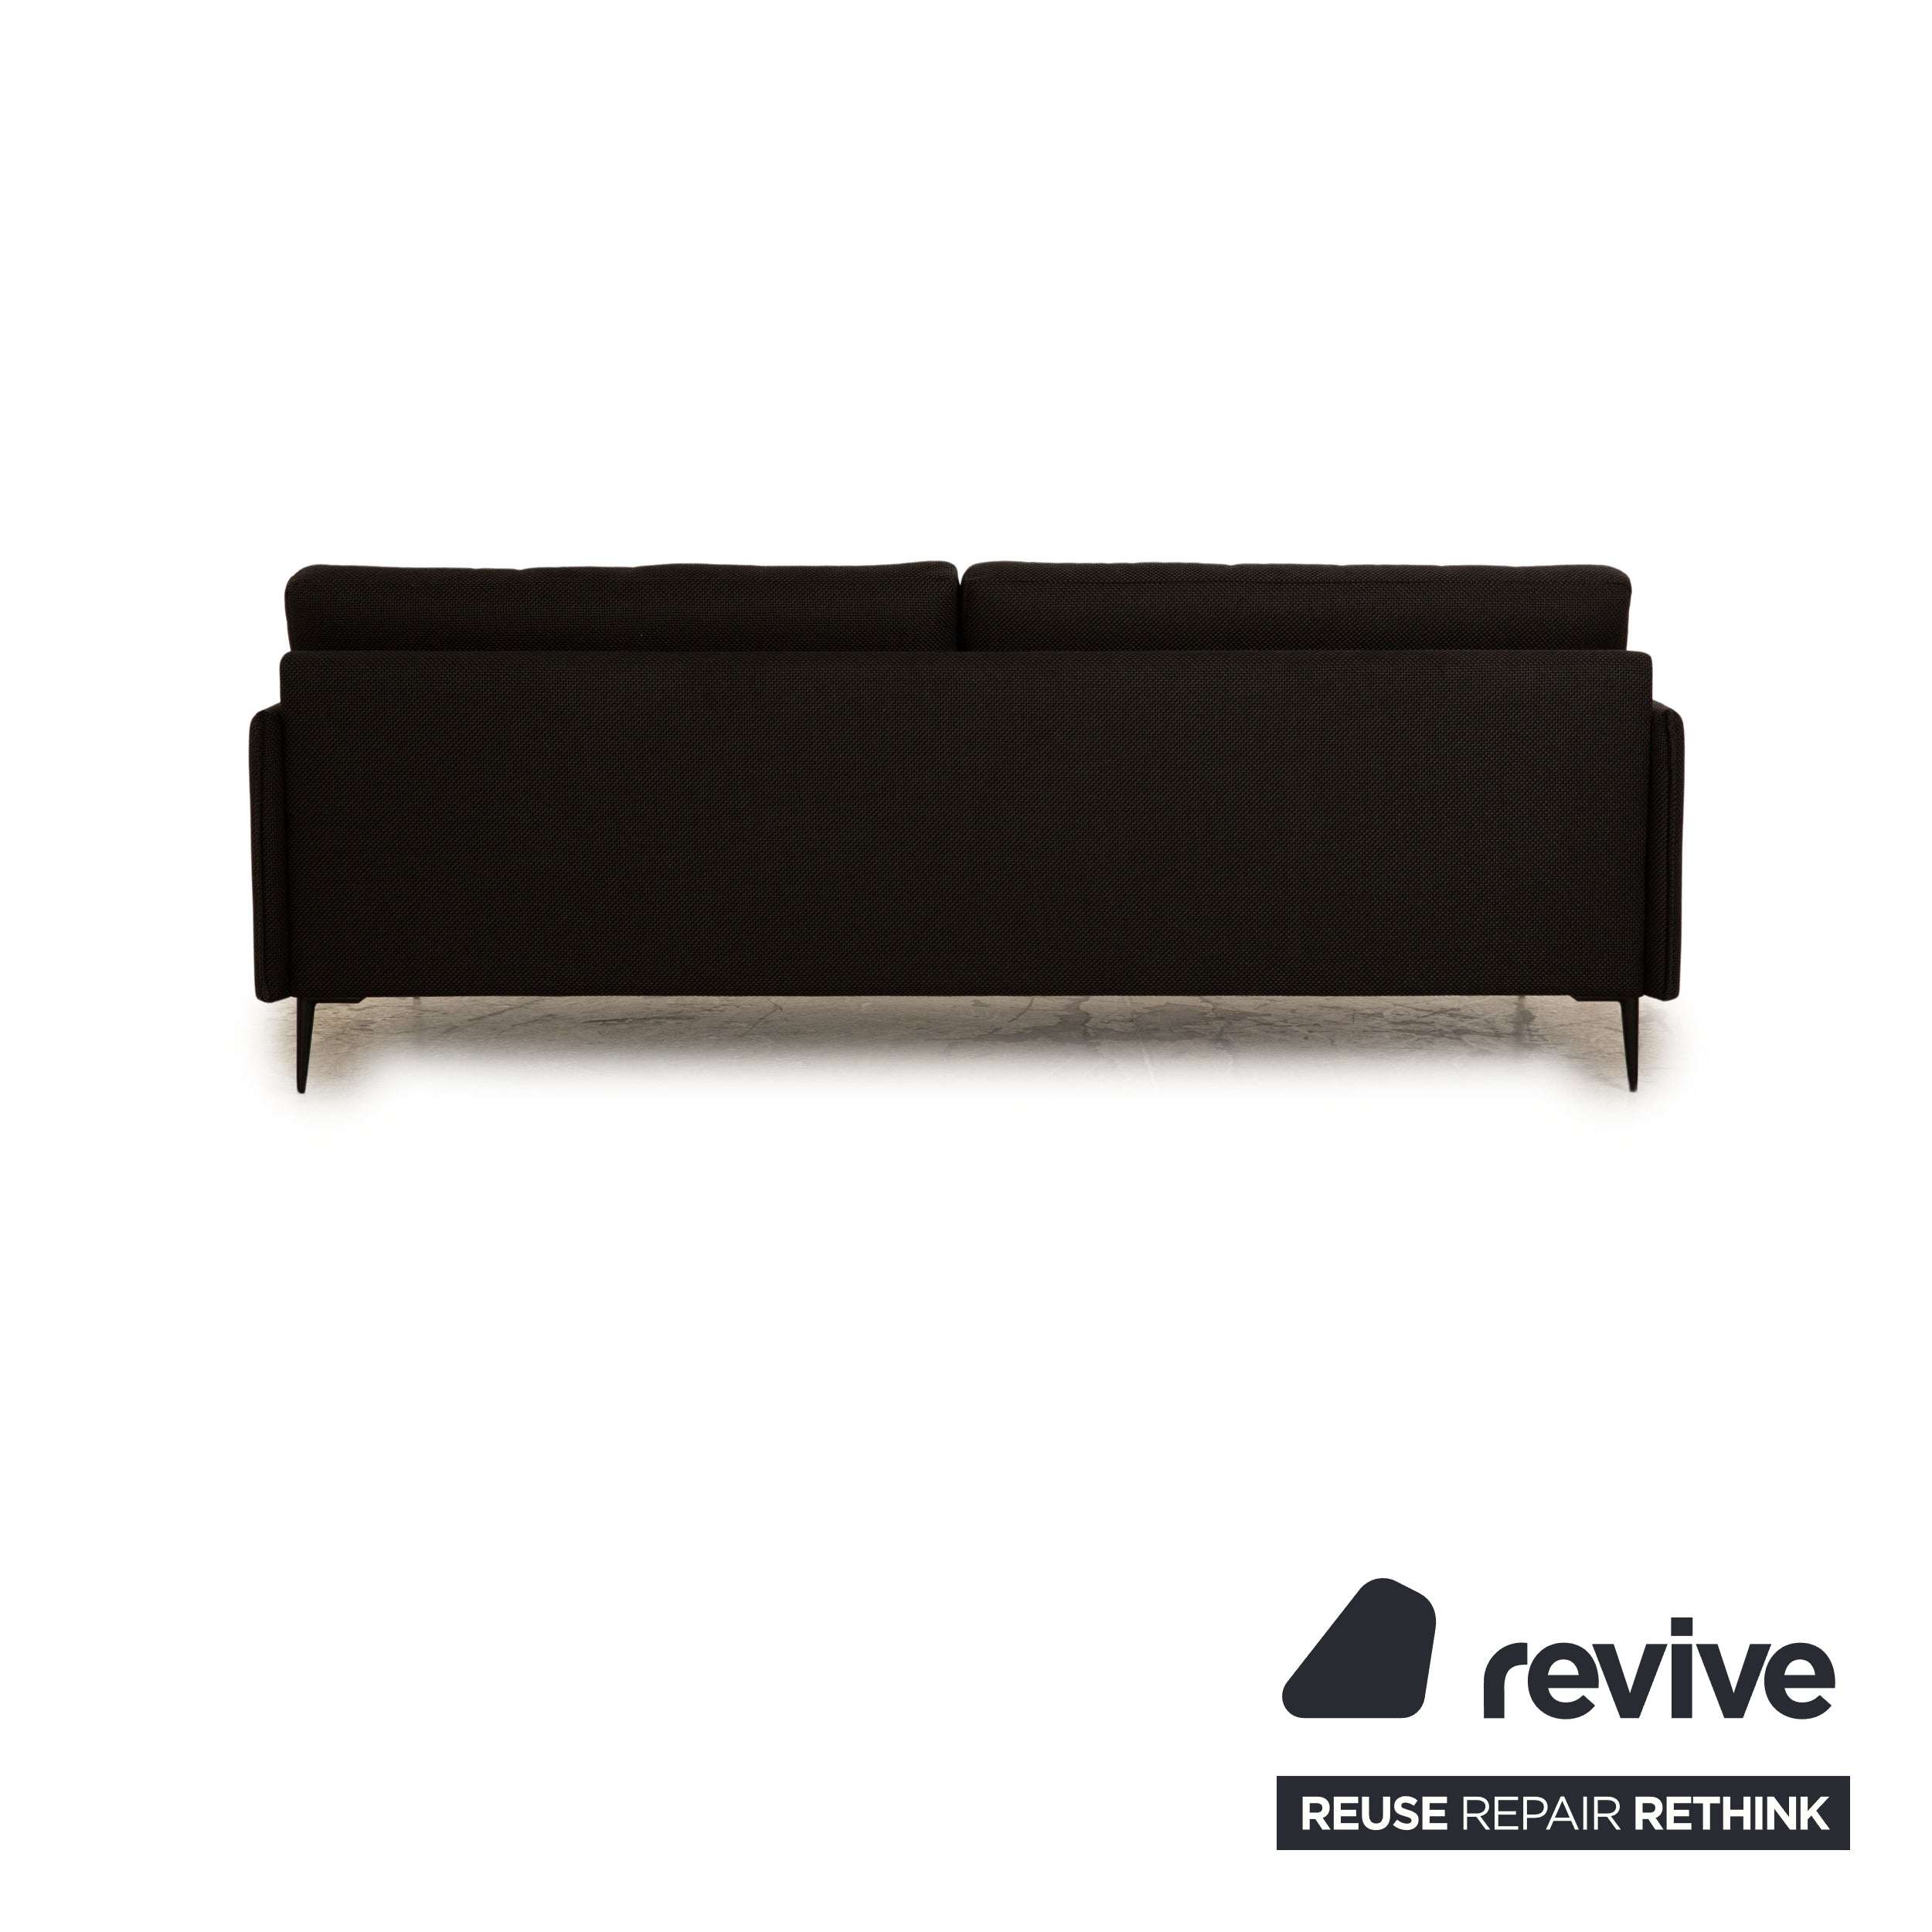 Erpo CL 820 Fabric Three-Seater Black Sofa Couch